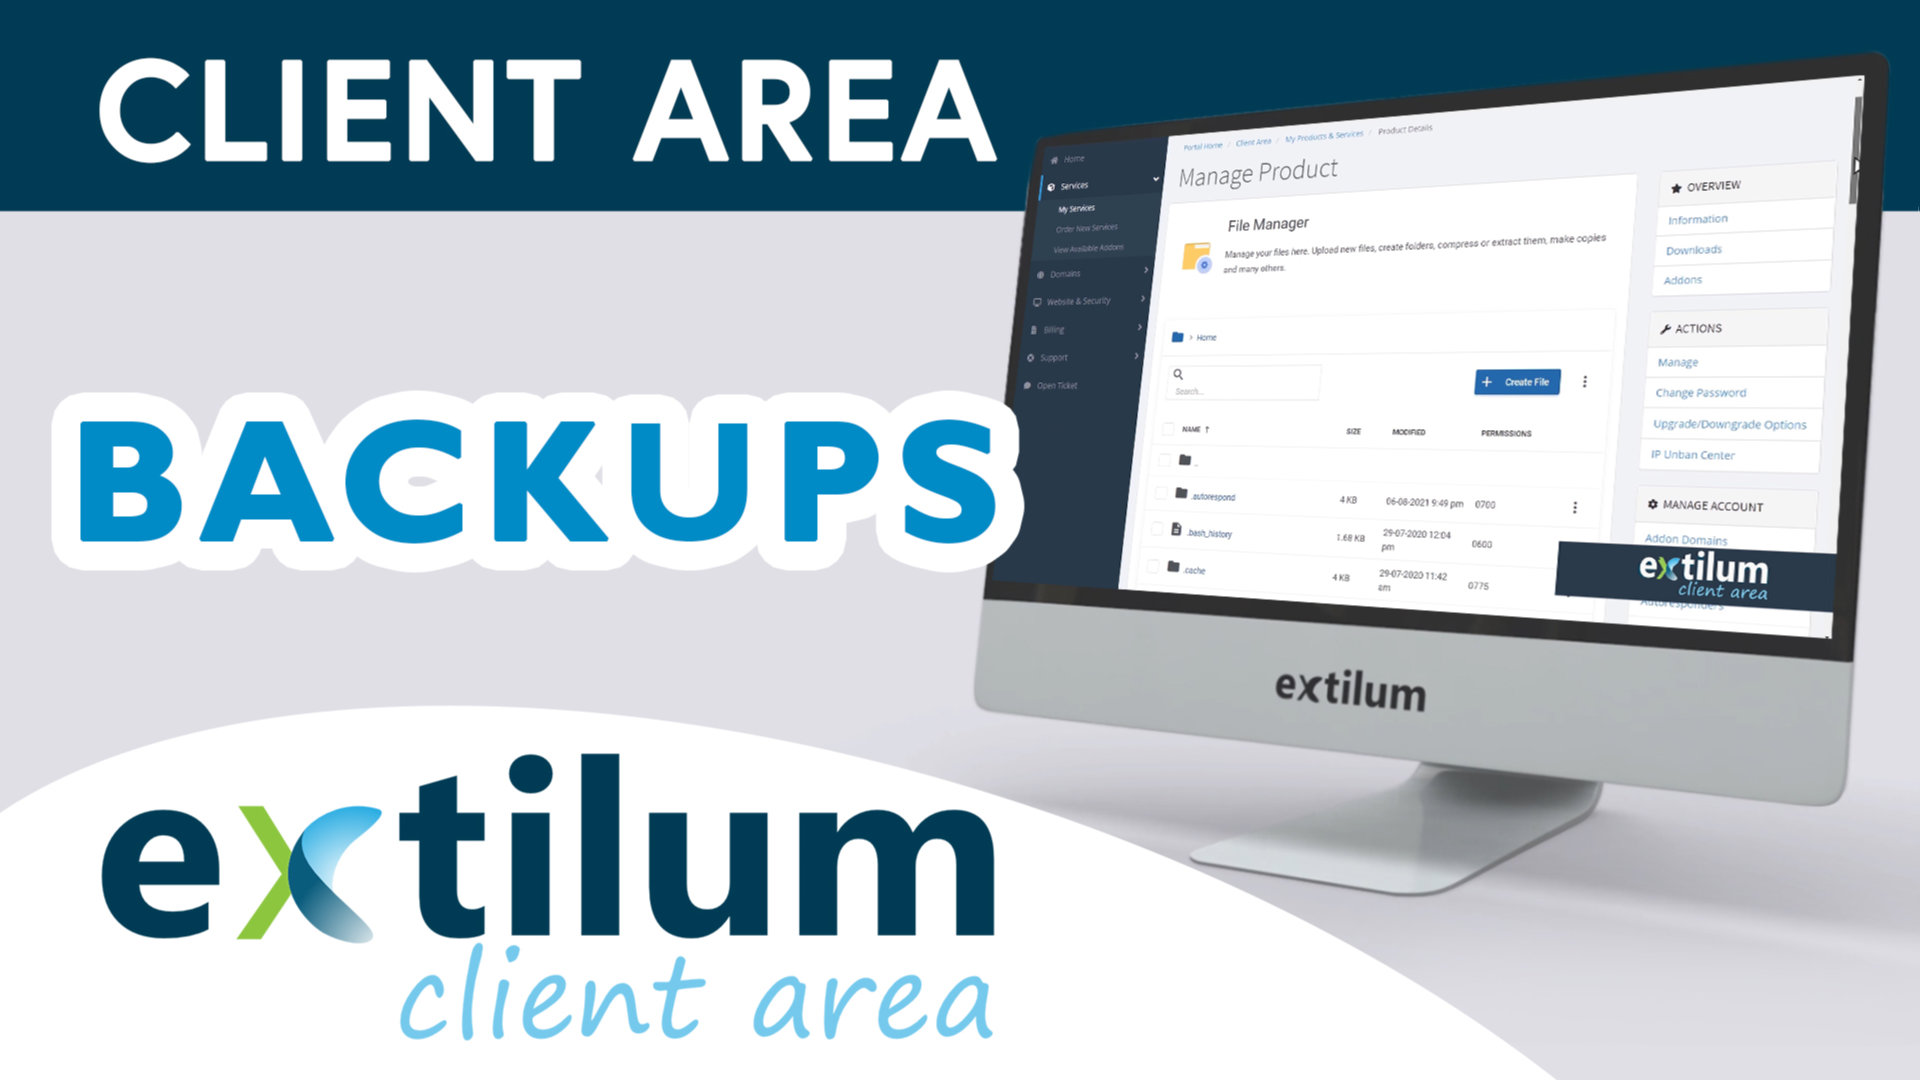 Extilum Client Area - Backups